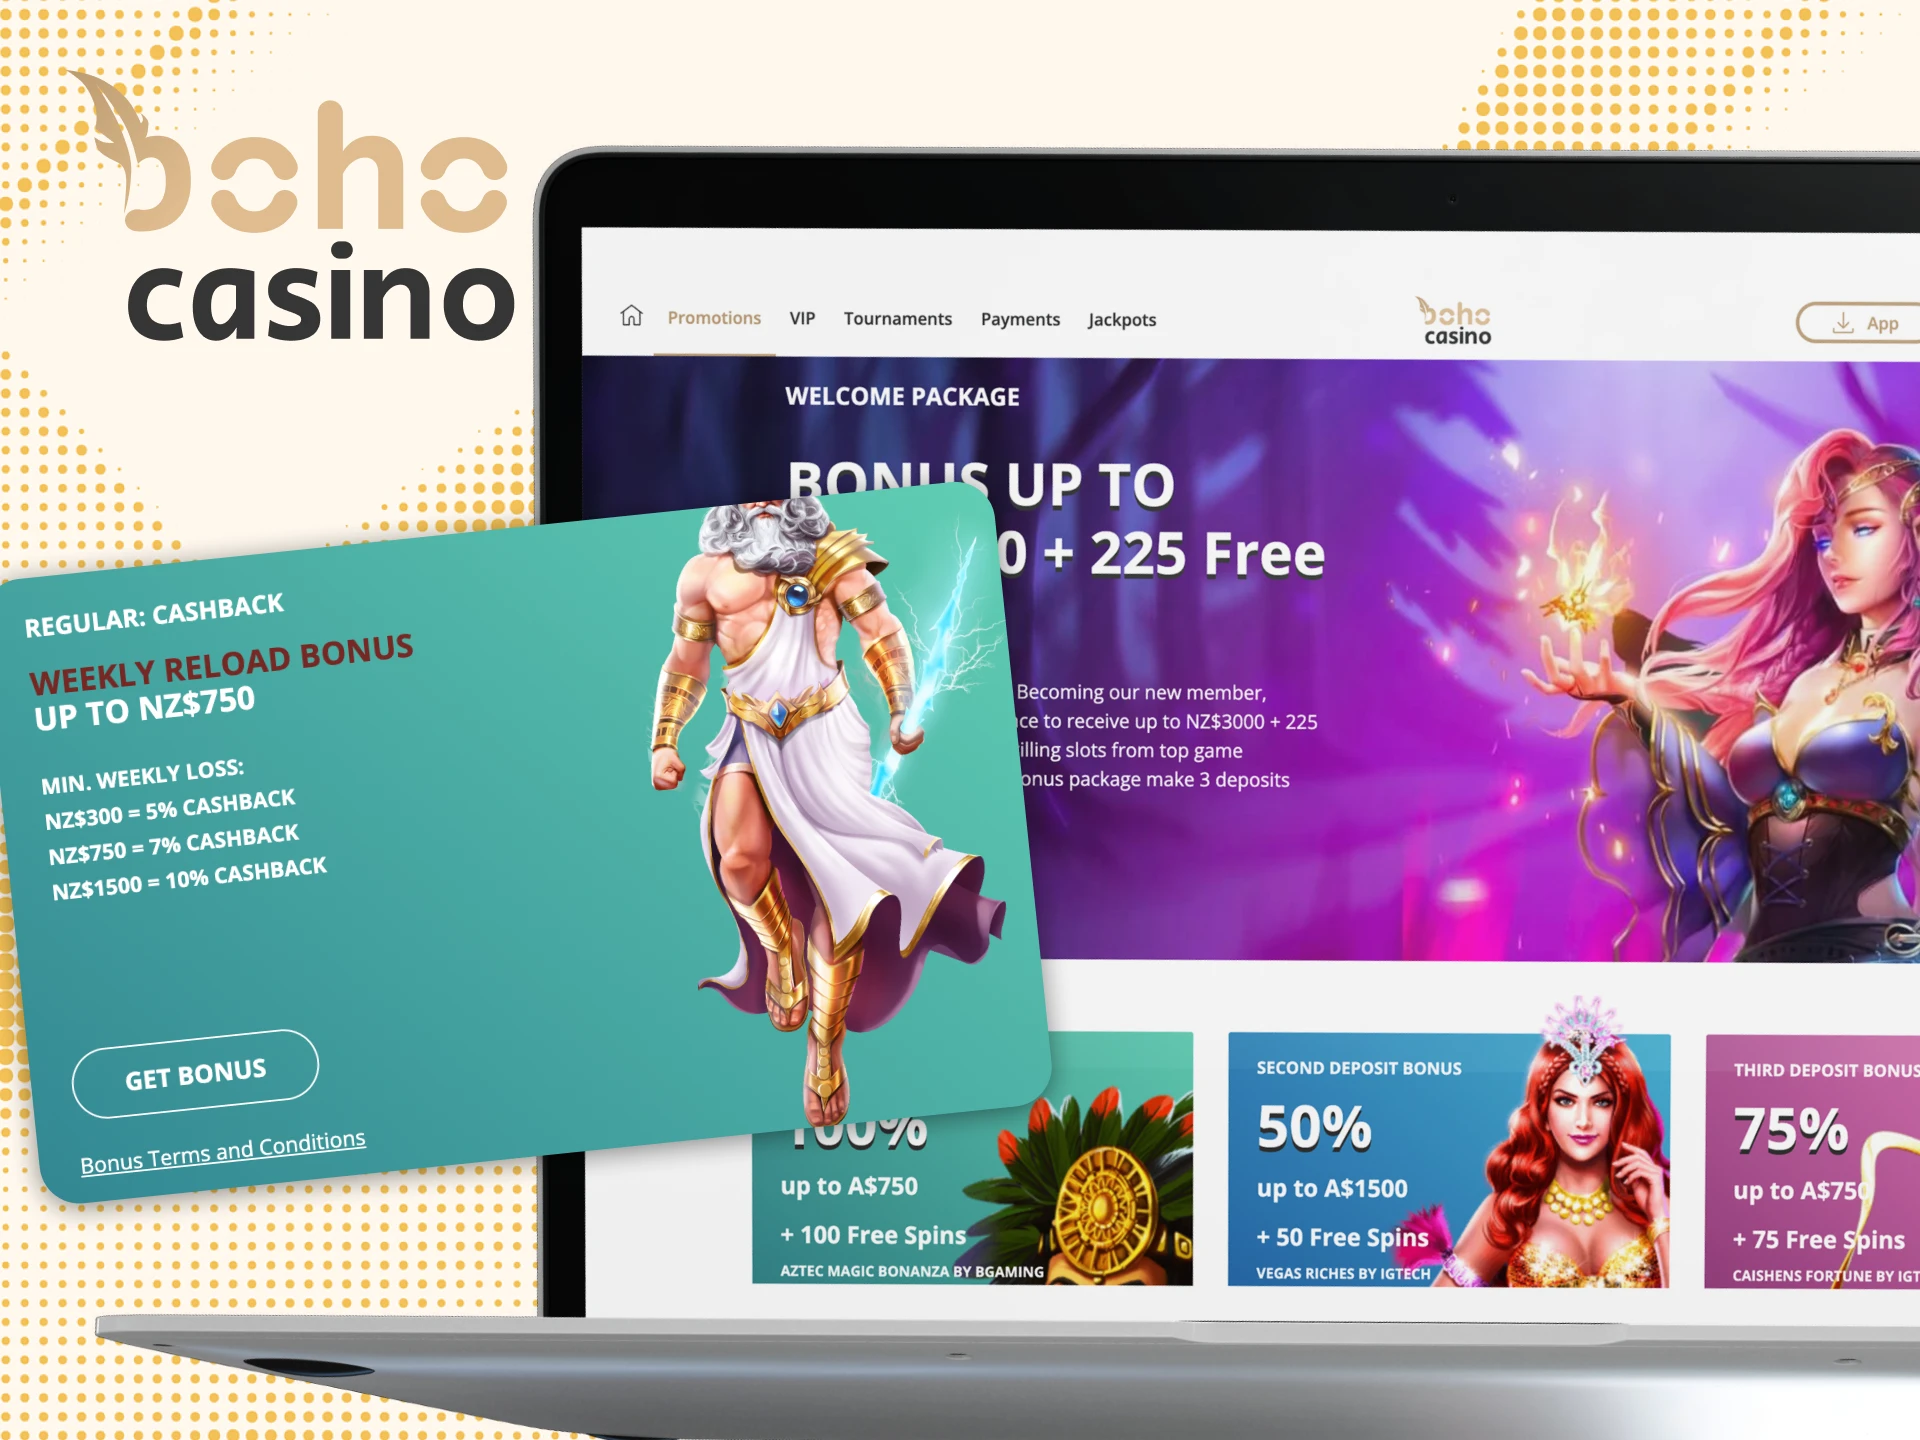 Get Boho Casino 10% cashback bonus on your weekly losses.